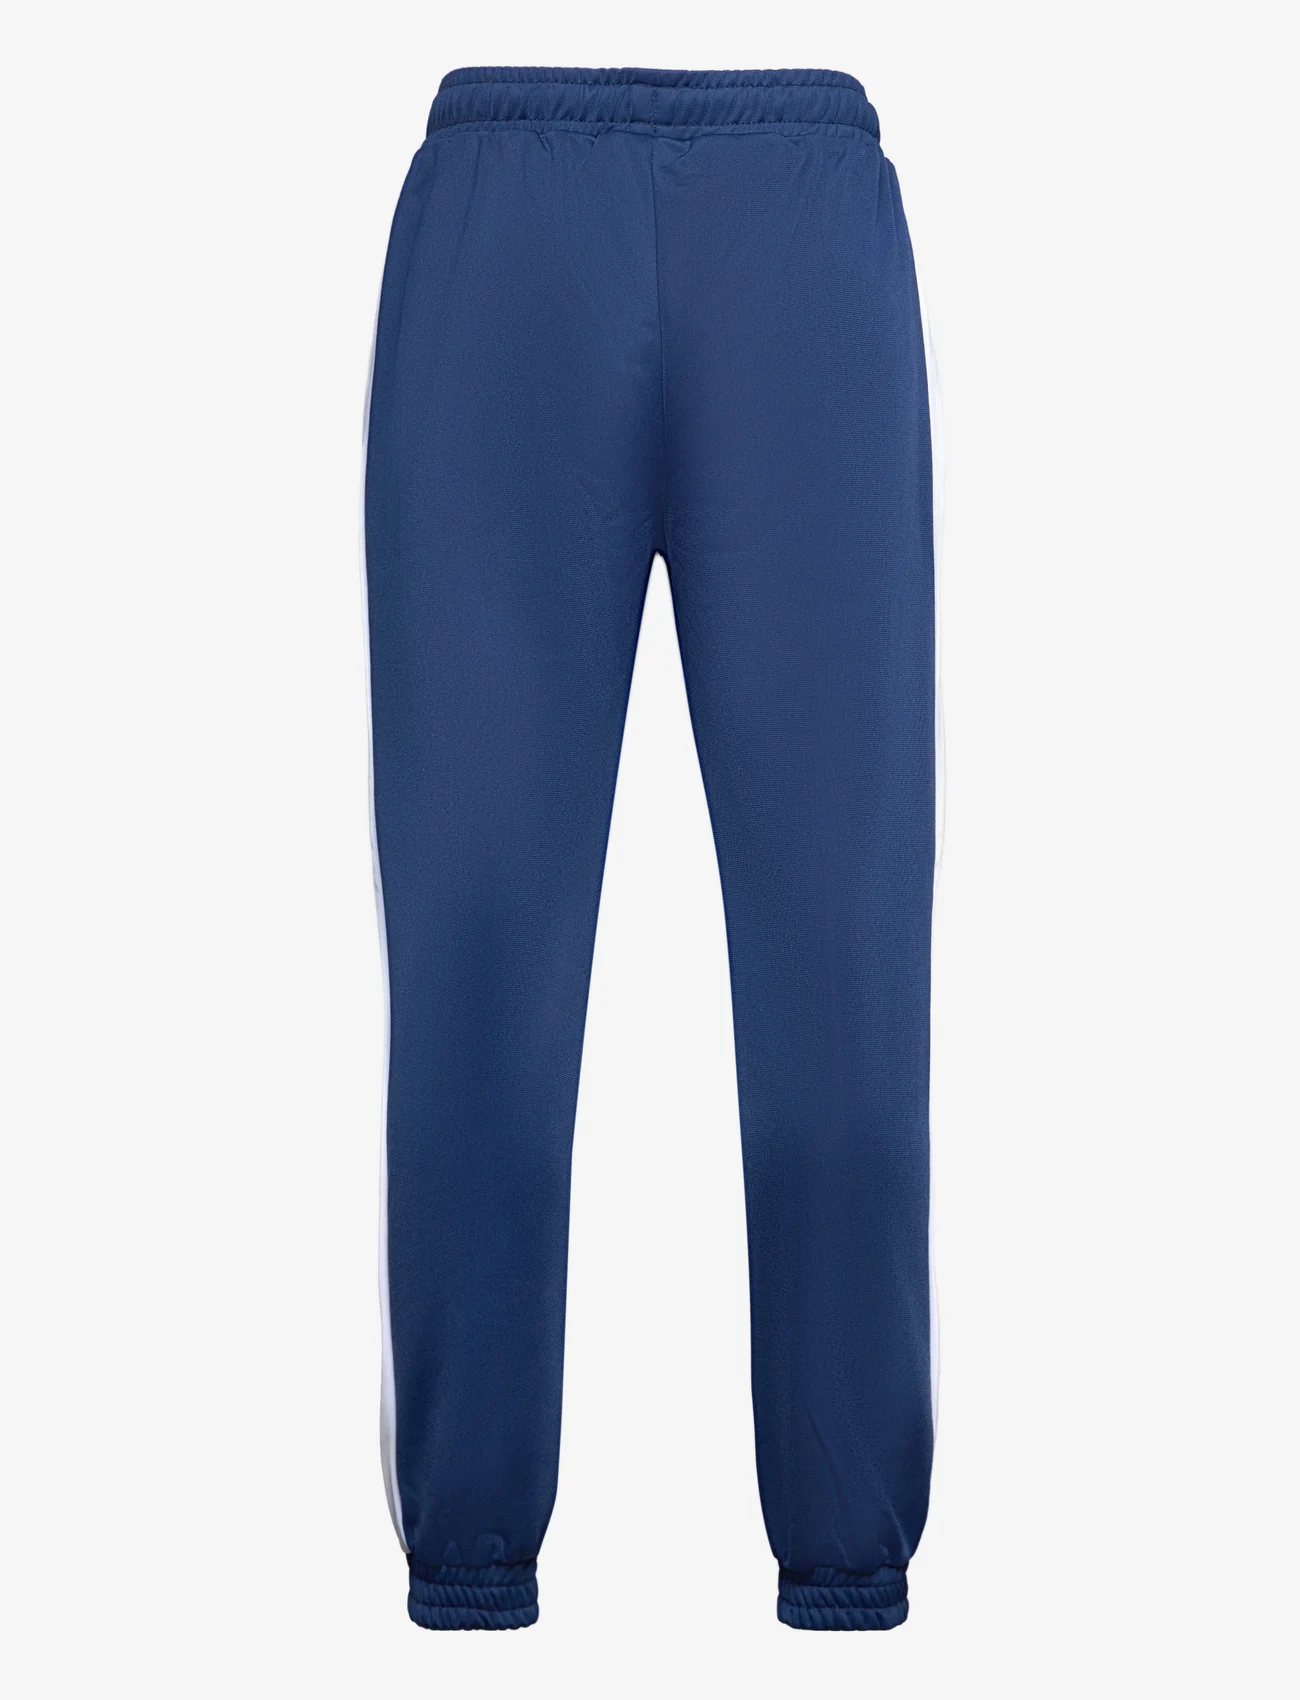 FILA - BIARRITZ track pants - summer savings - medieval blue-bright white - 1